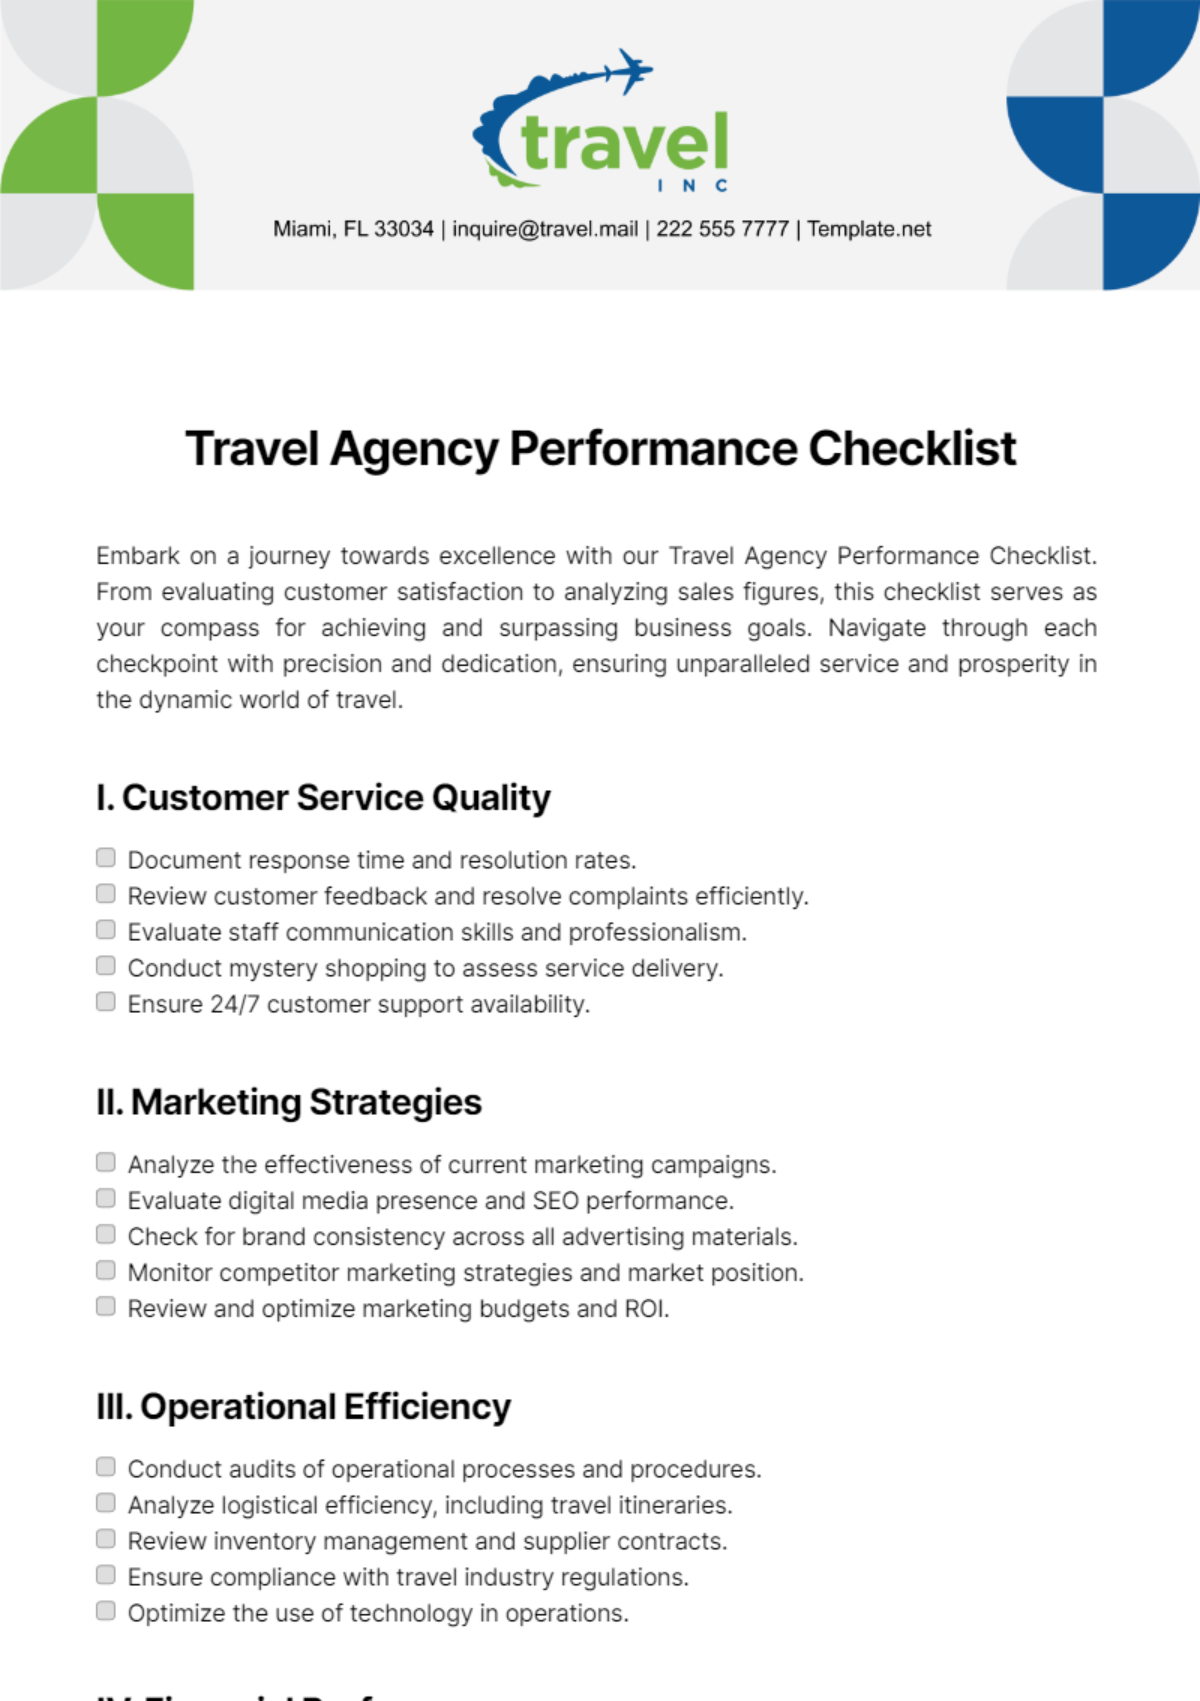 Travel Agency Performance Checklist Template